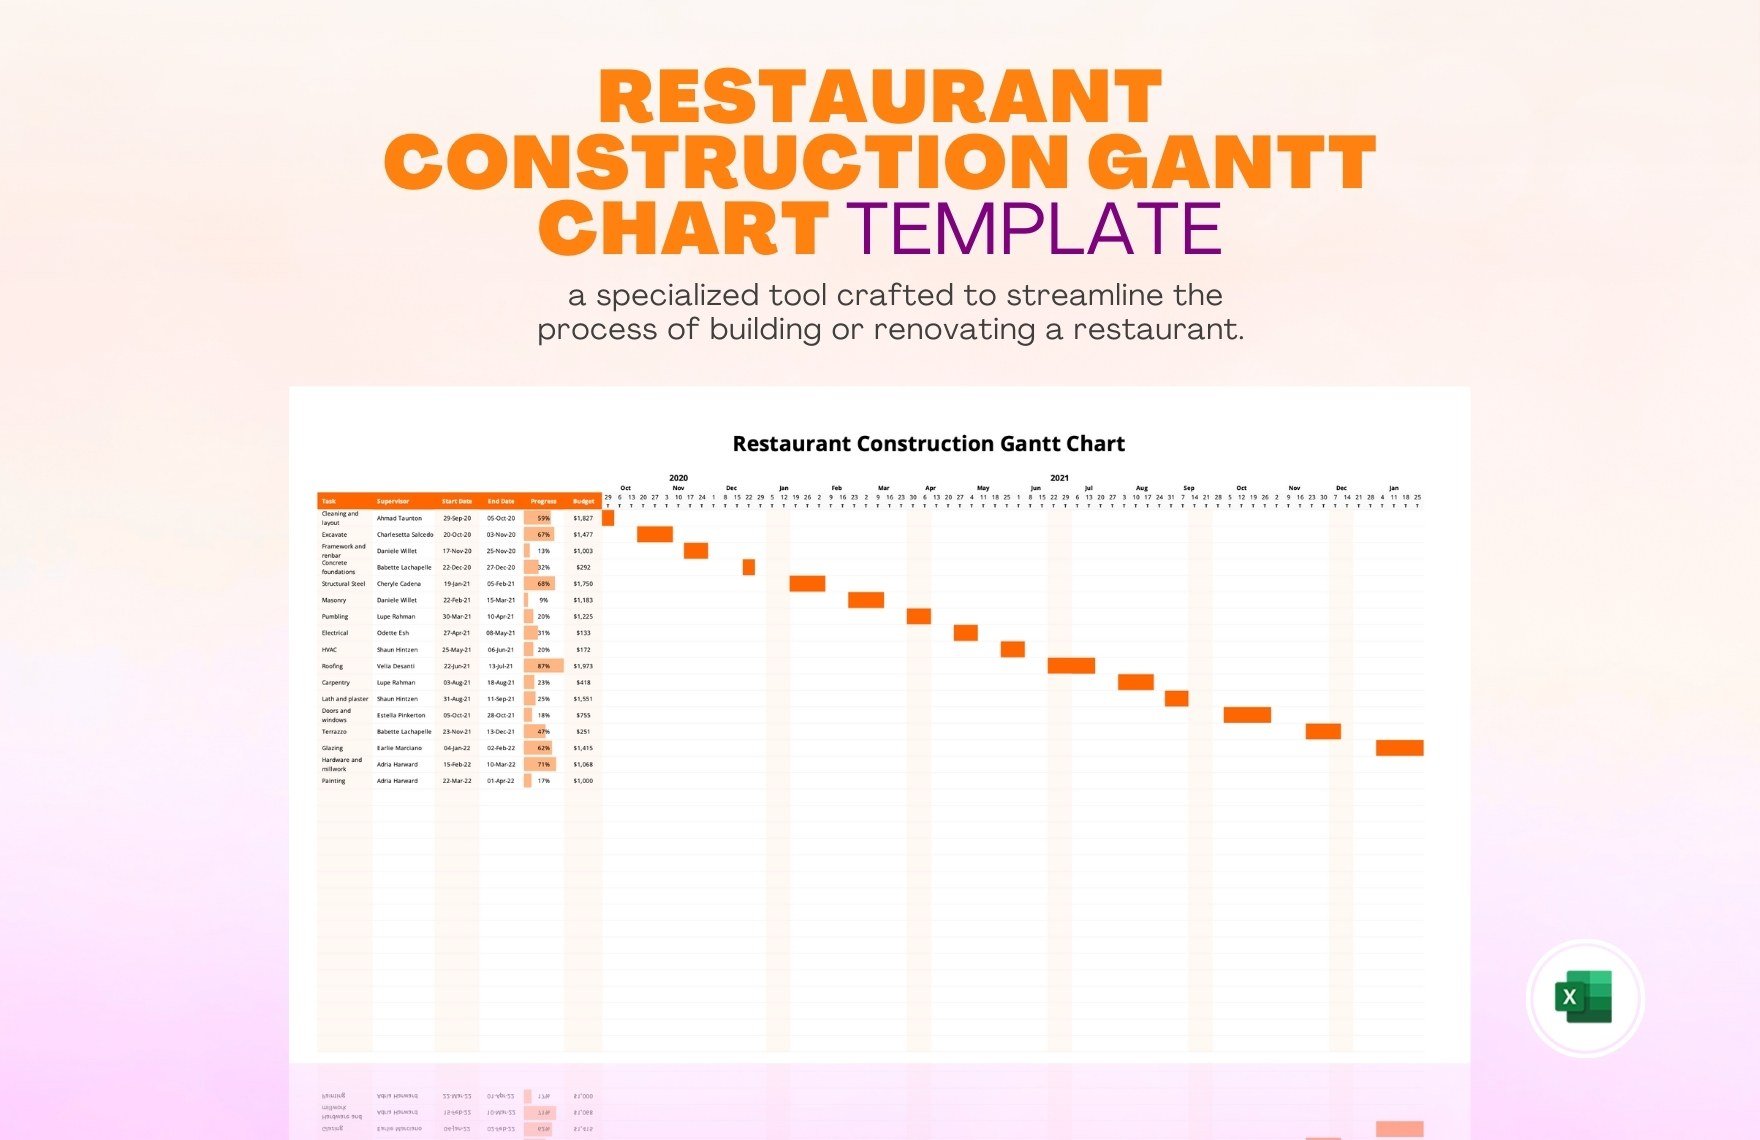 Restaurant Construction Gantt Chart Template in Excel